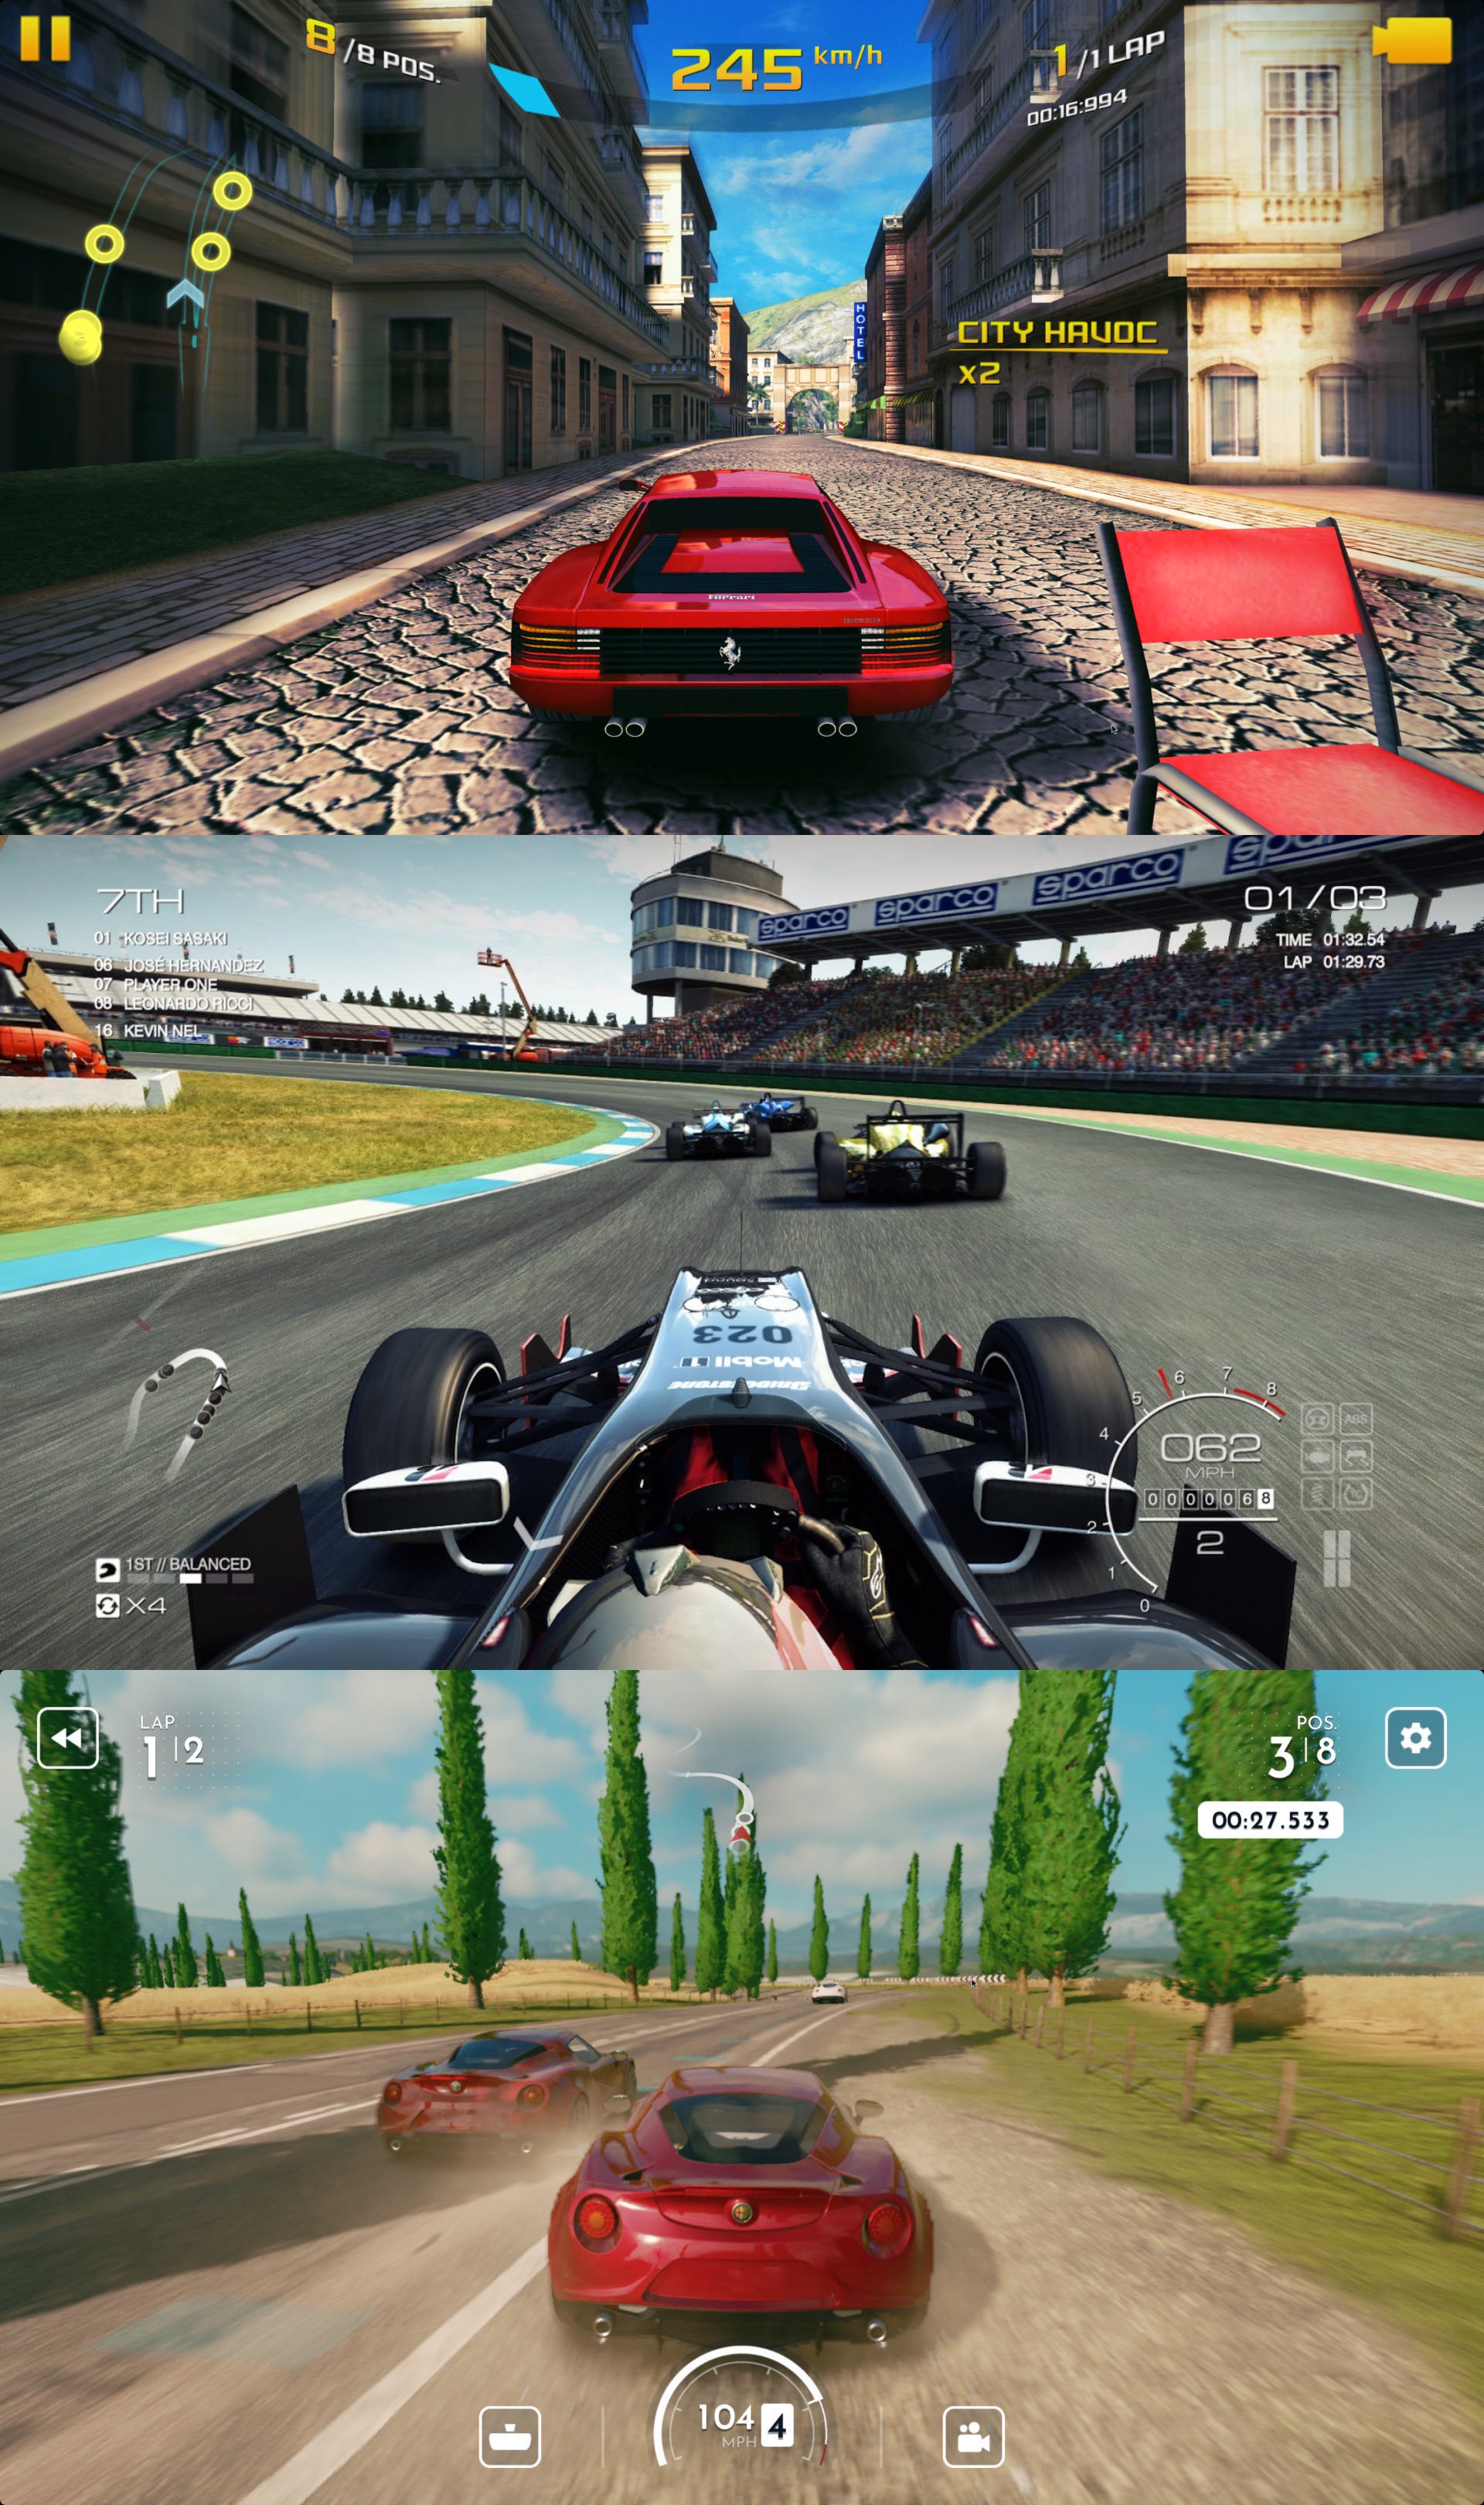 Three screenshots from similar-looking racing games.